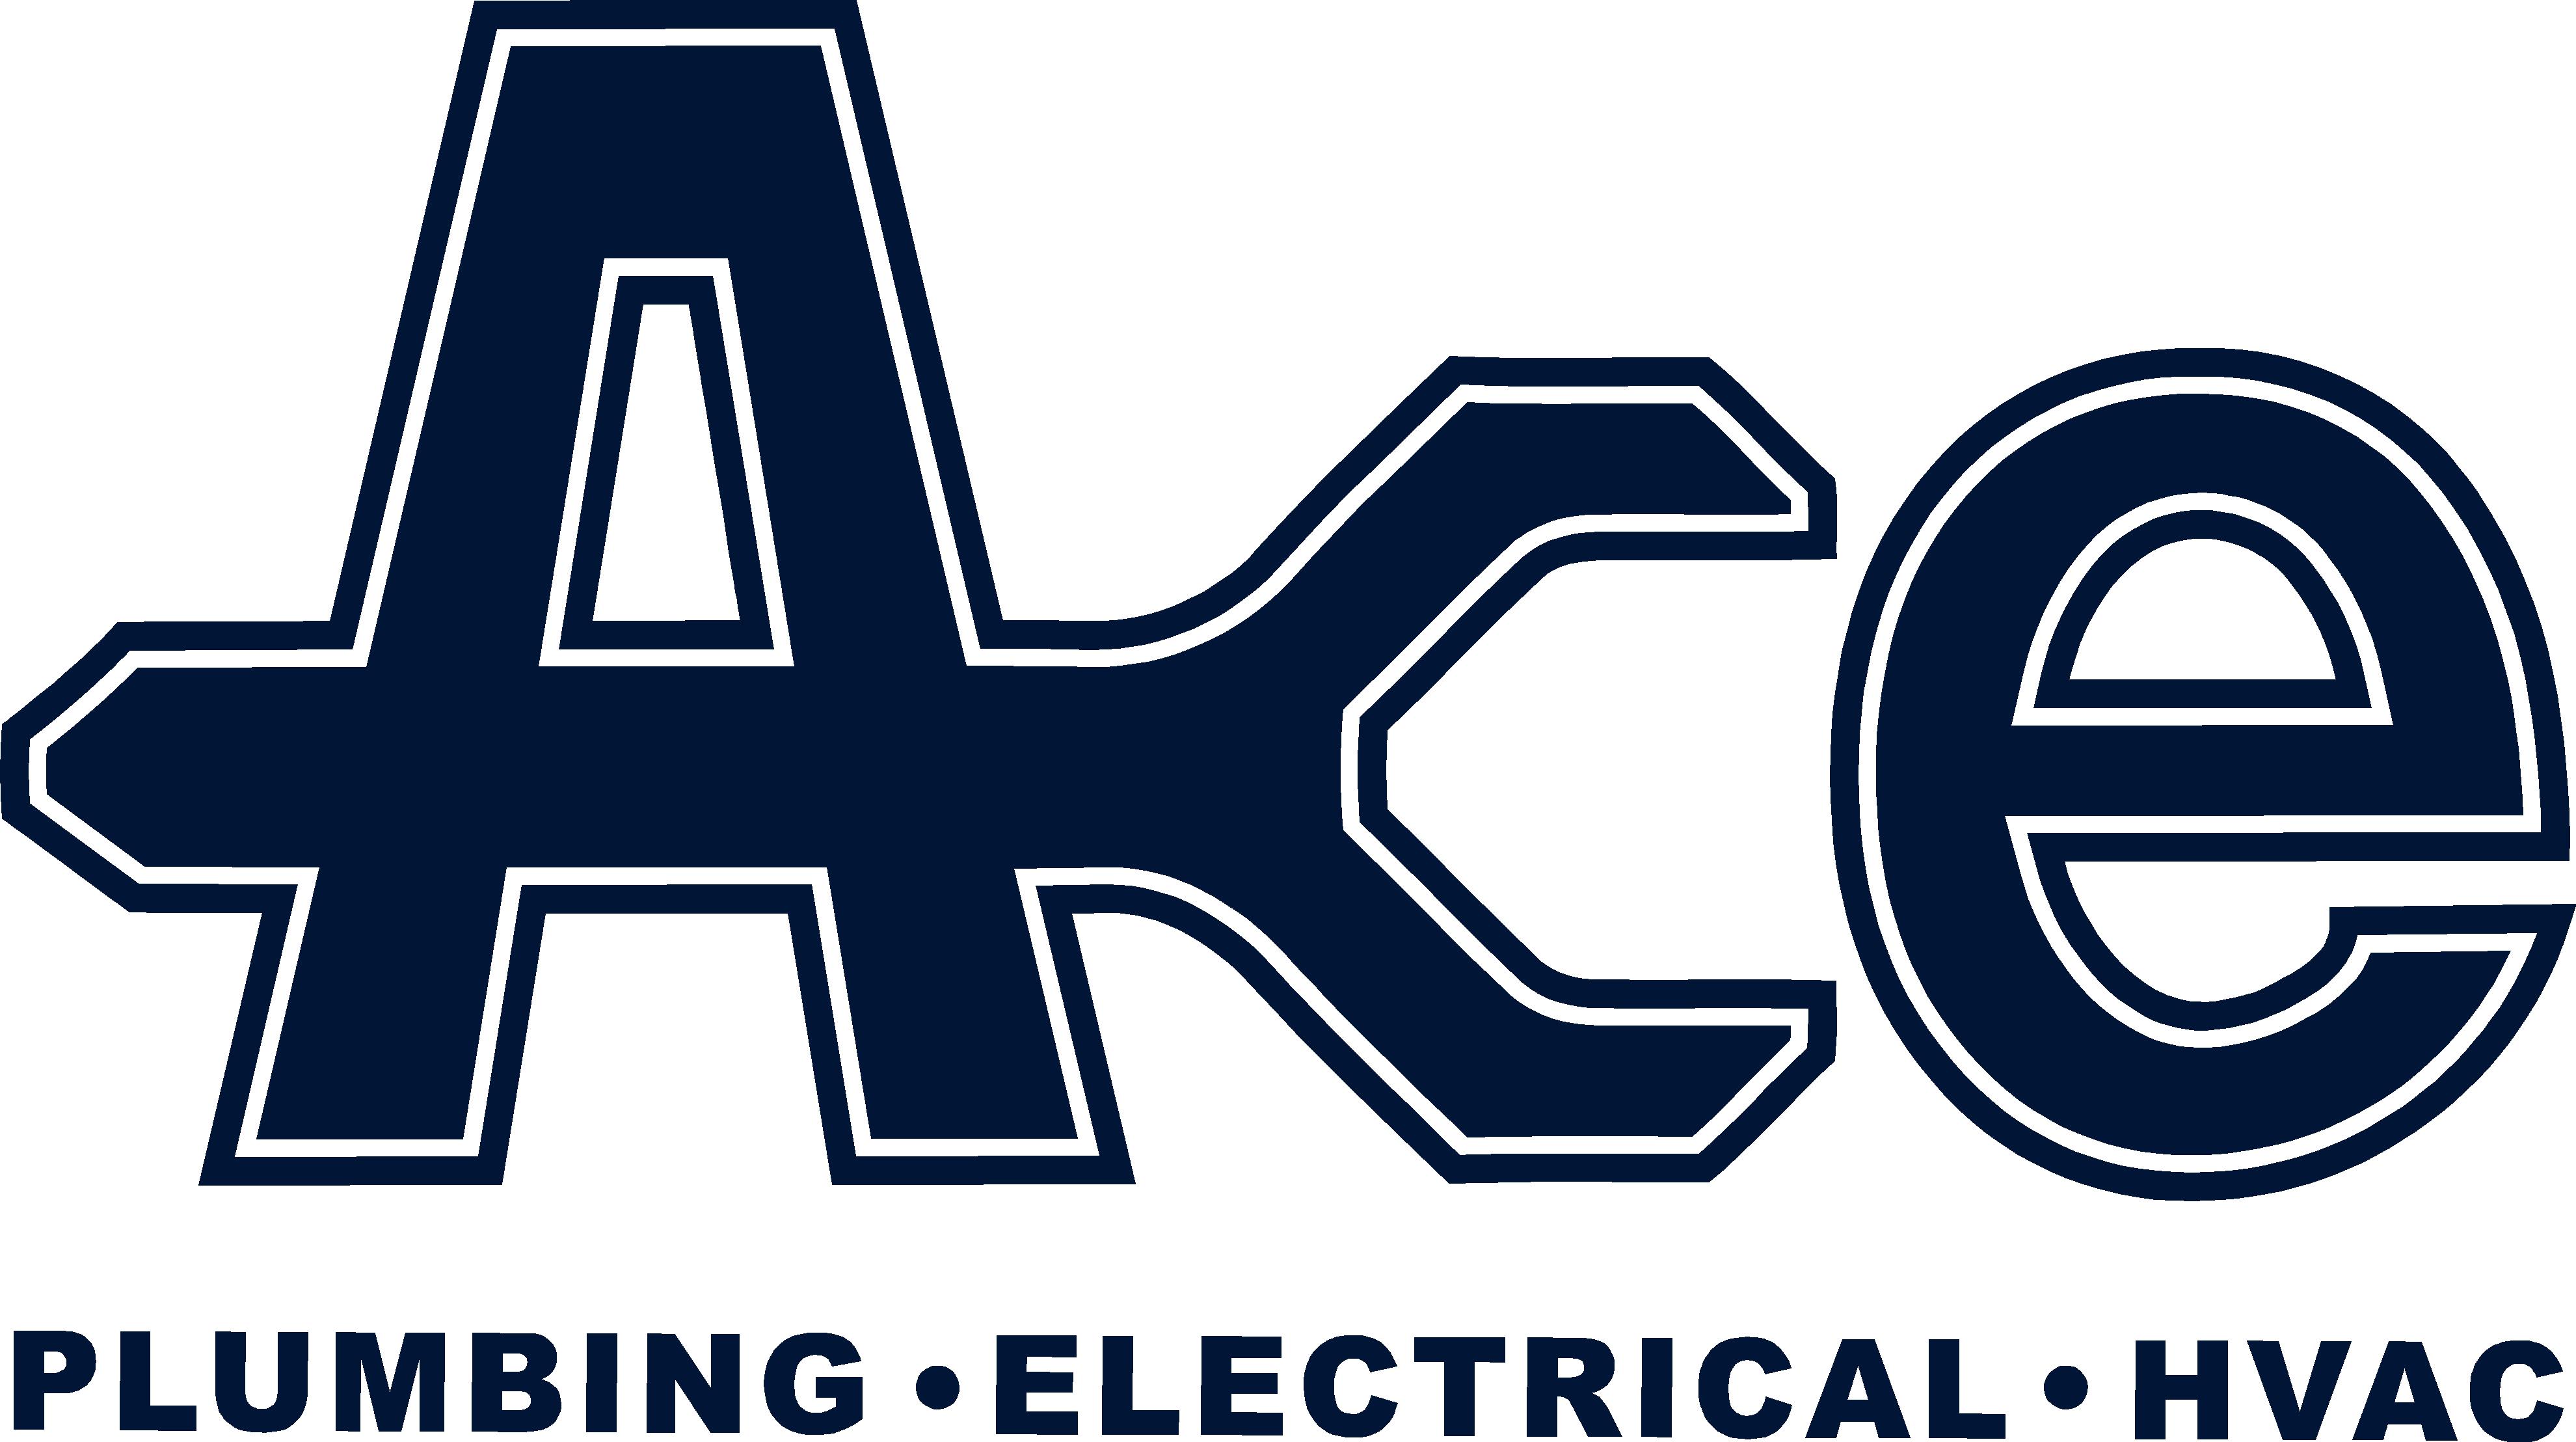 Ace Plumbing, Electric, Heating & Air, LLC Logo